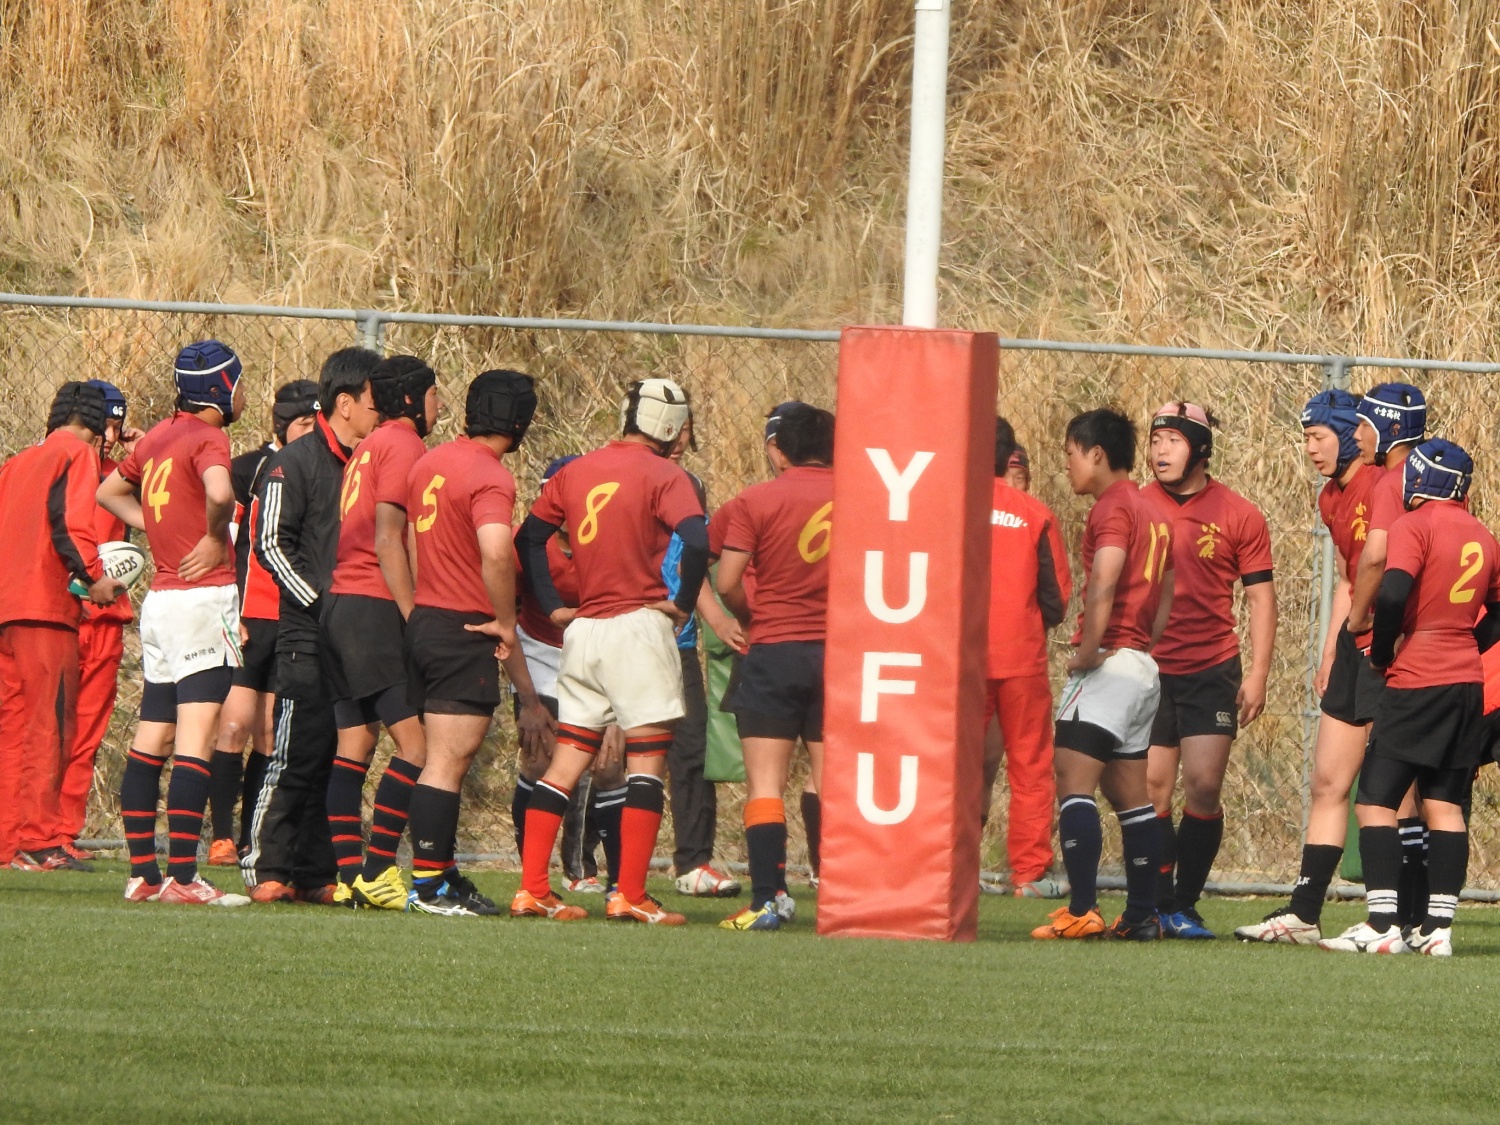 http://kokura-rugby.sakura.ne.jp/c0109_xlarge.jpg